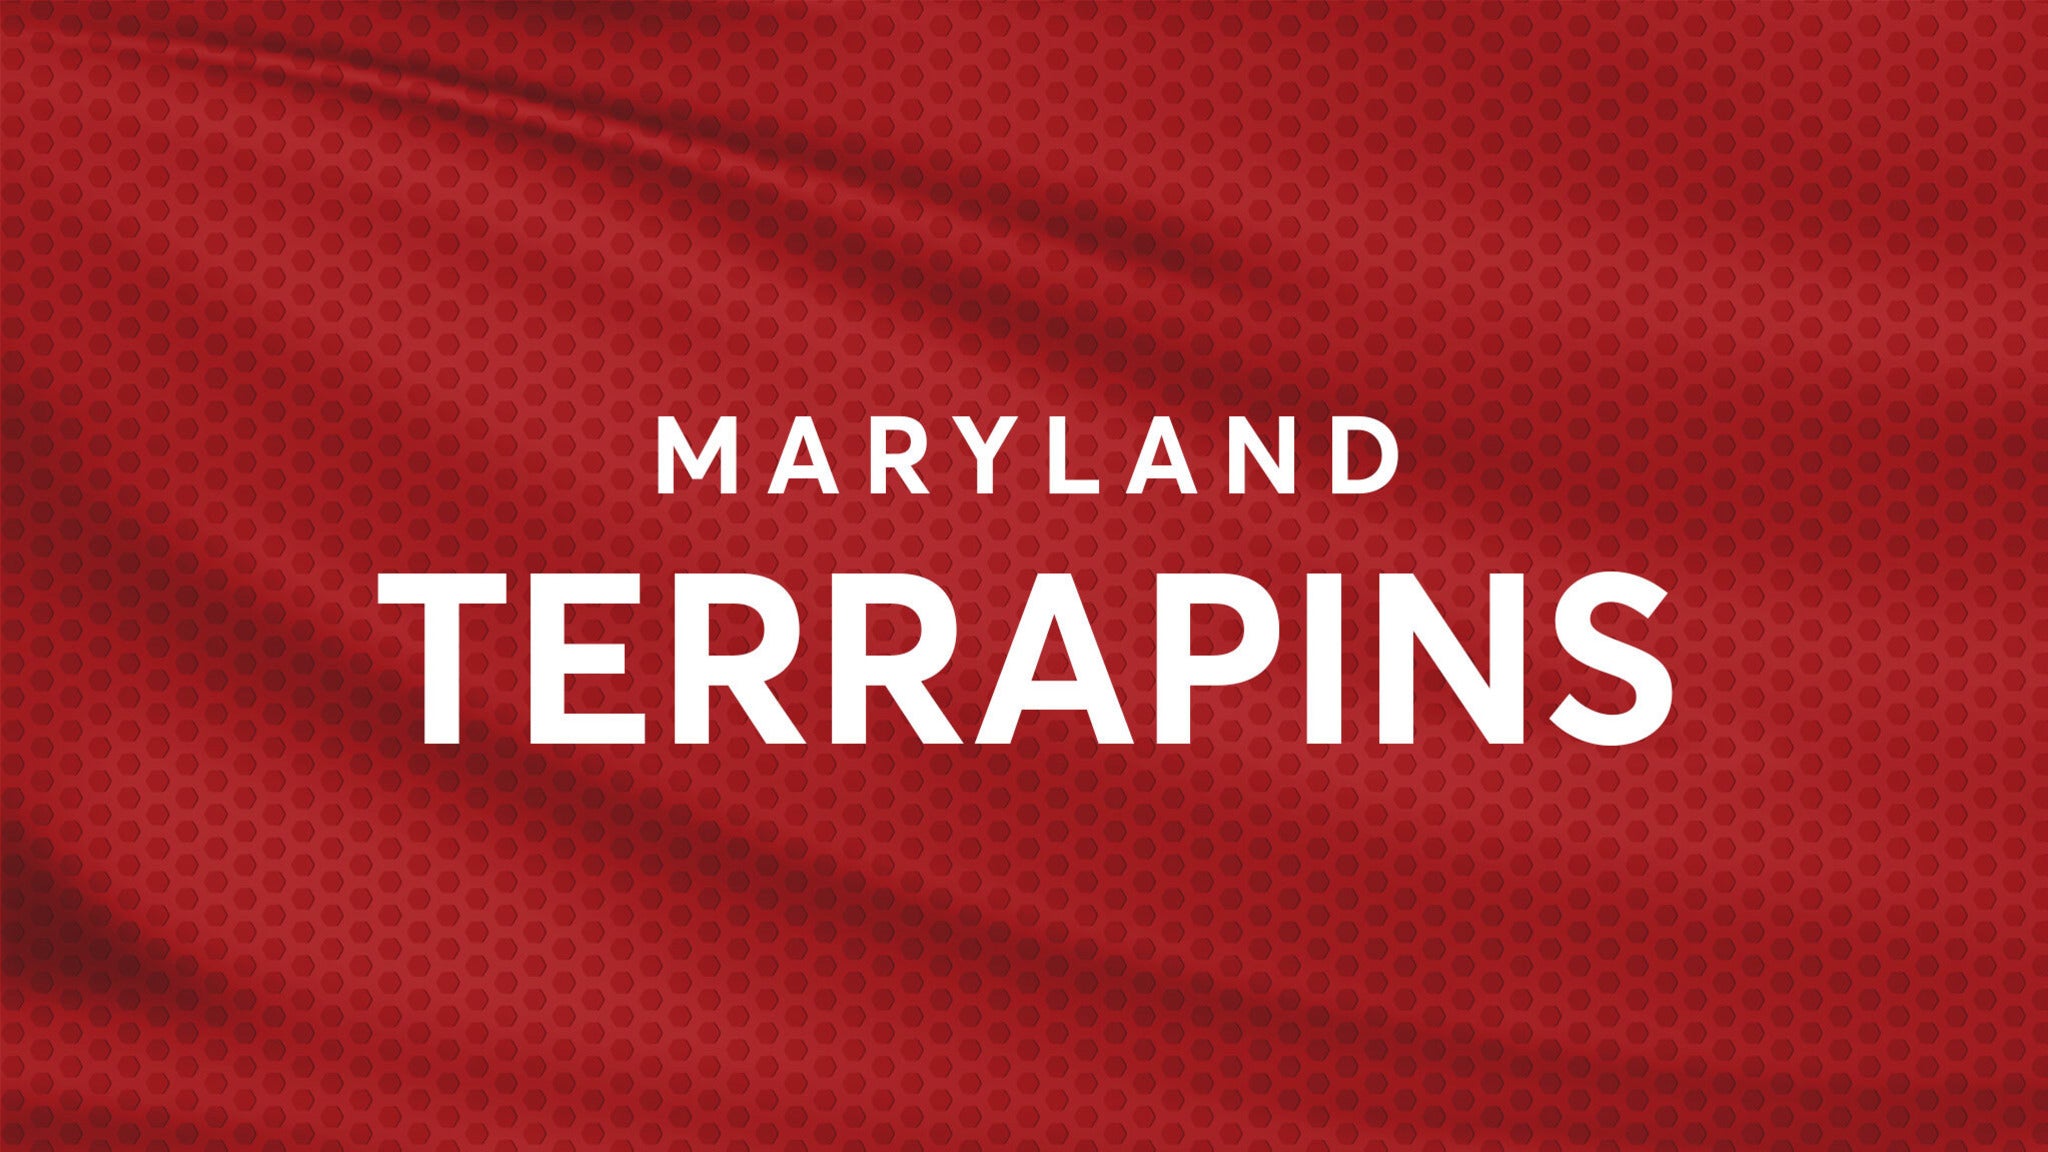 Maryland Terrapins Men?s Soccer vs. University of Virginia Men's Soccer in Washington promo photo for Audi Field Premium presale offer code